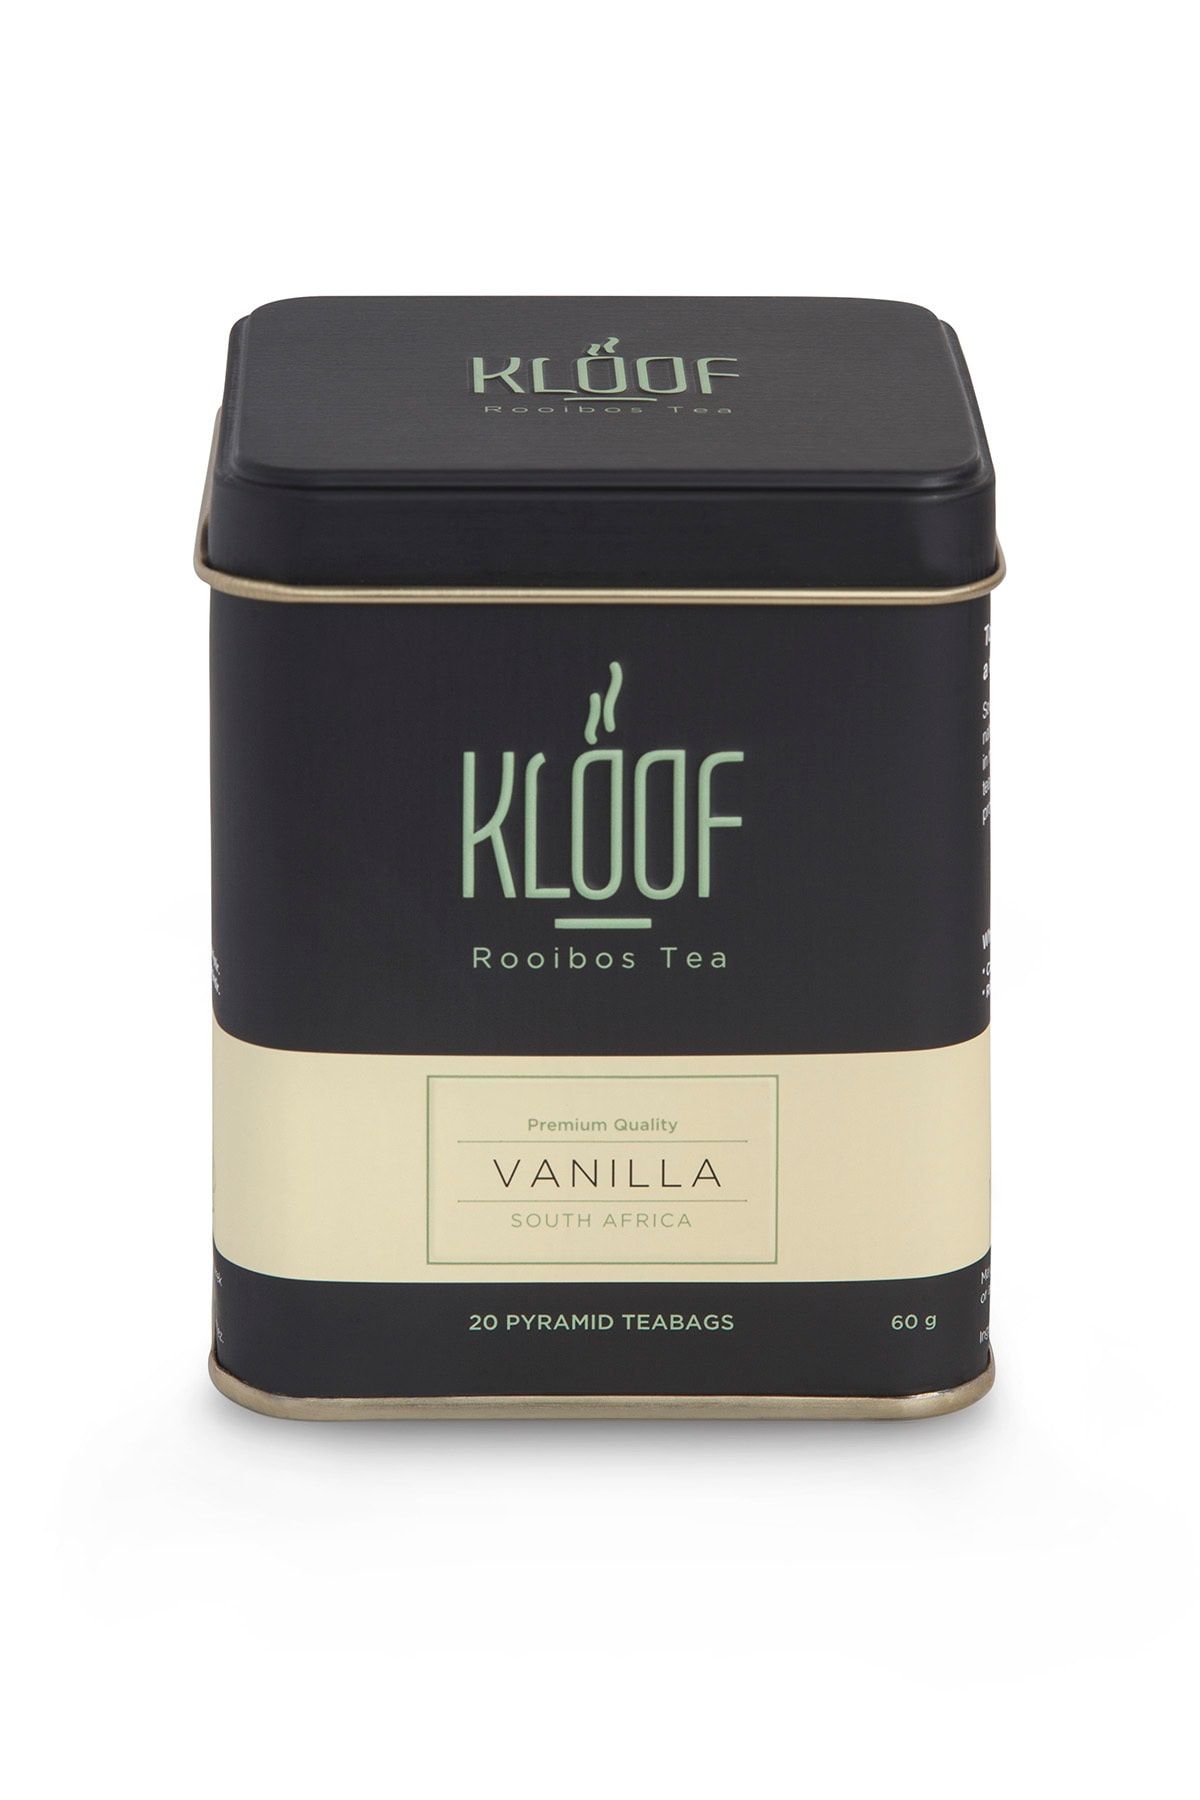 KLOOF Rooibos Tea Vanilla Rooibos Tea - Vanilya Aromalı Roybos Çayı 20 Adet Biodegradable Piramit Poşet 60g